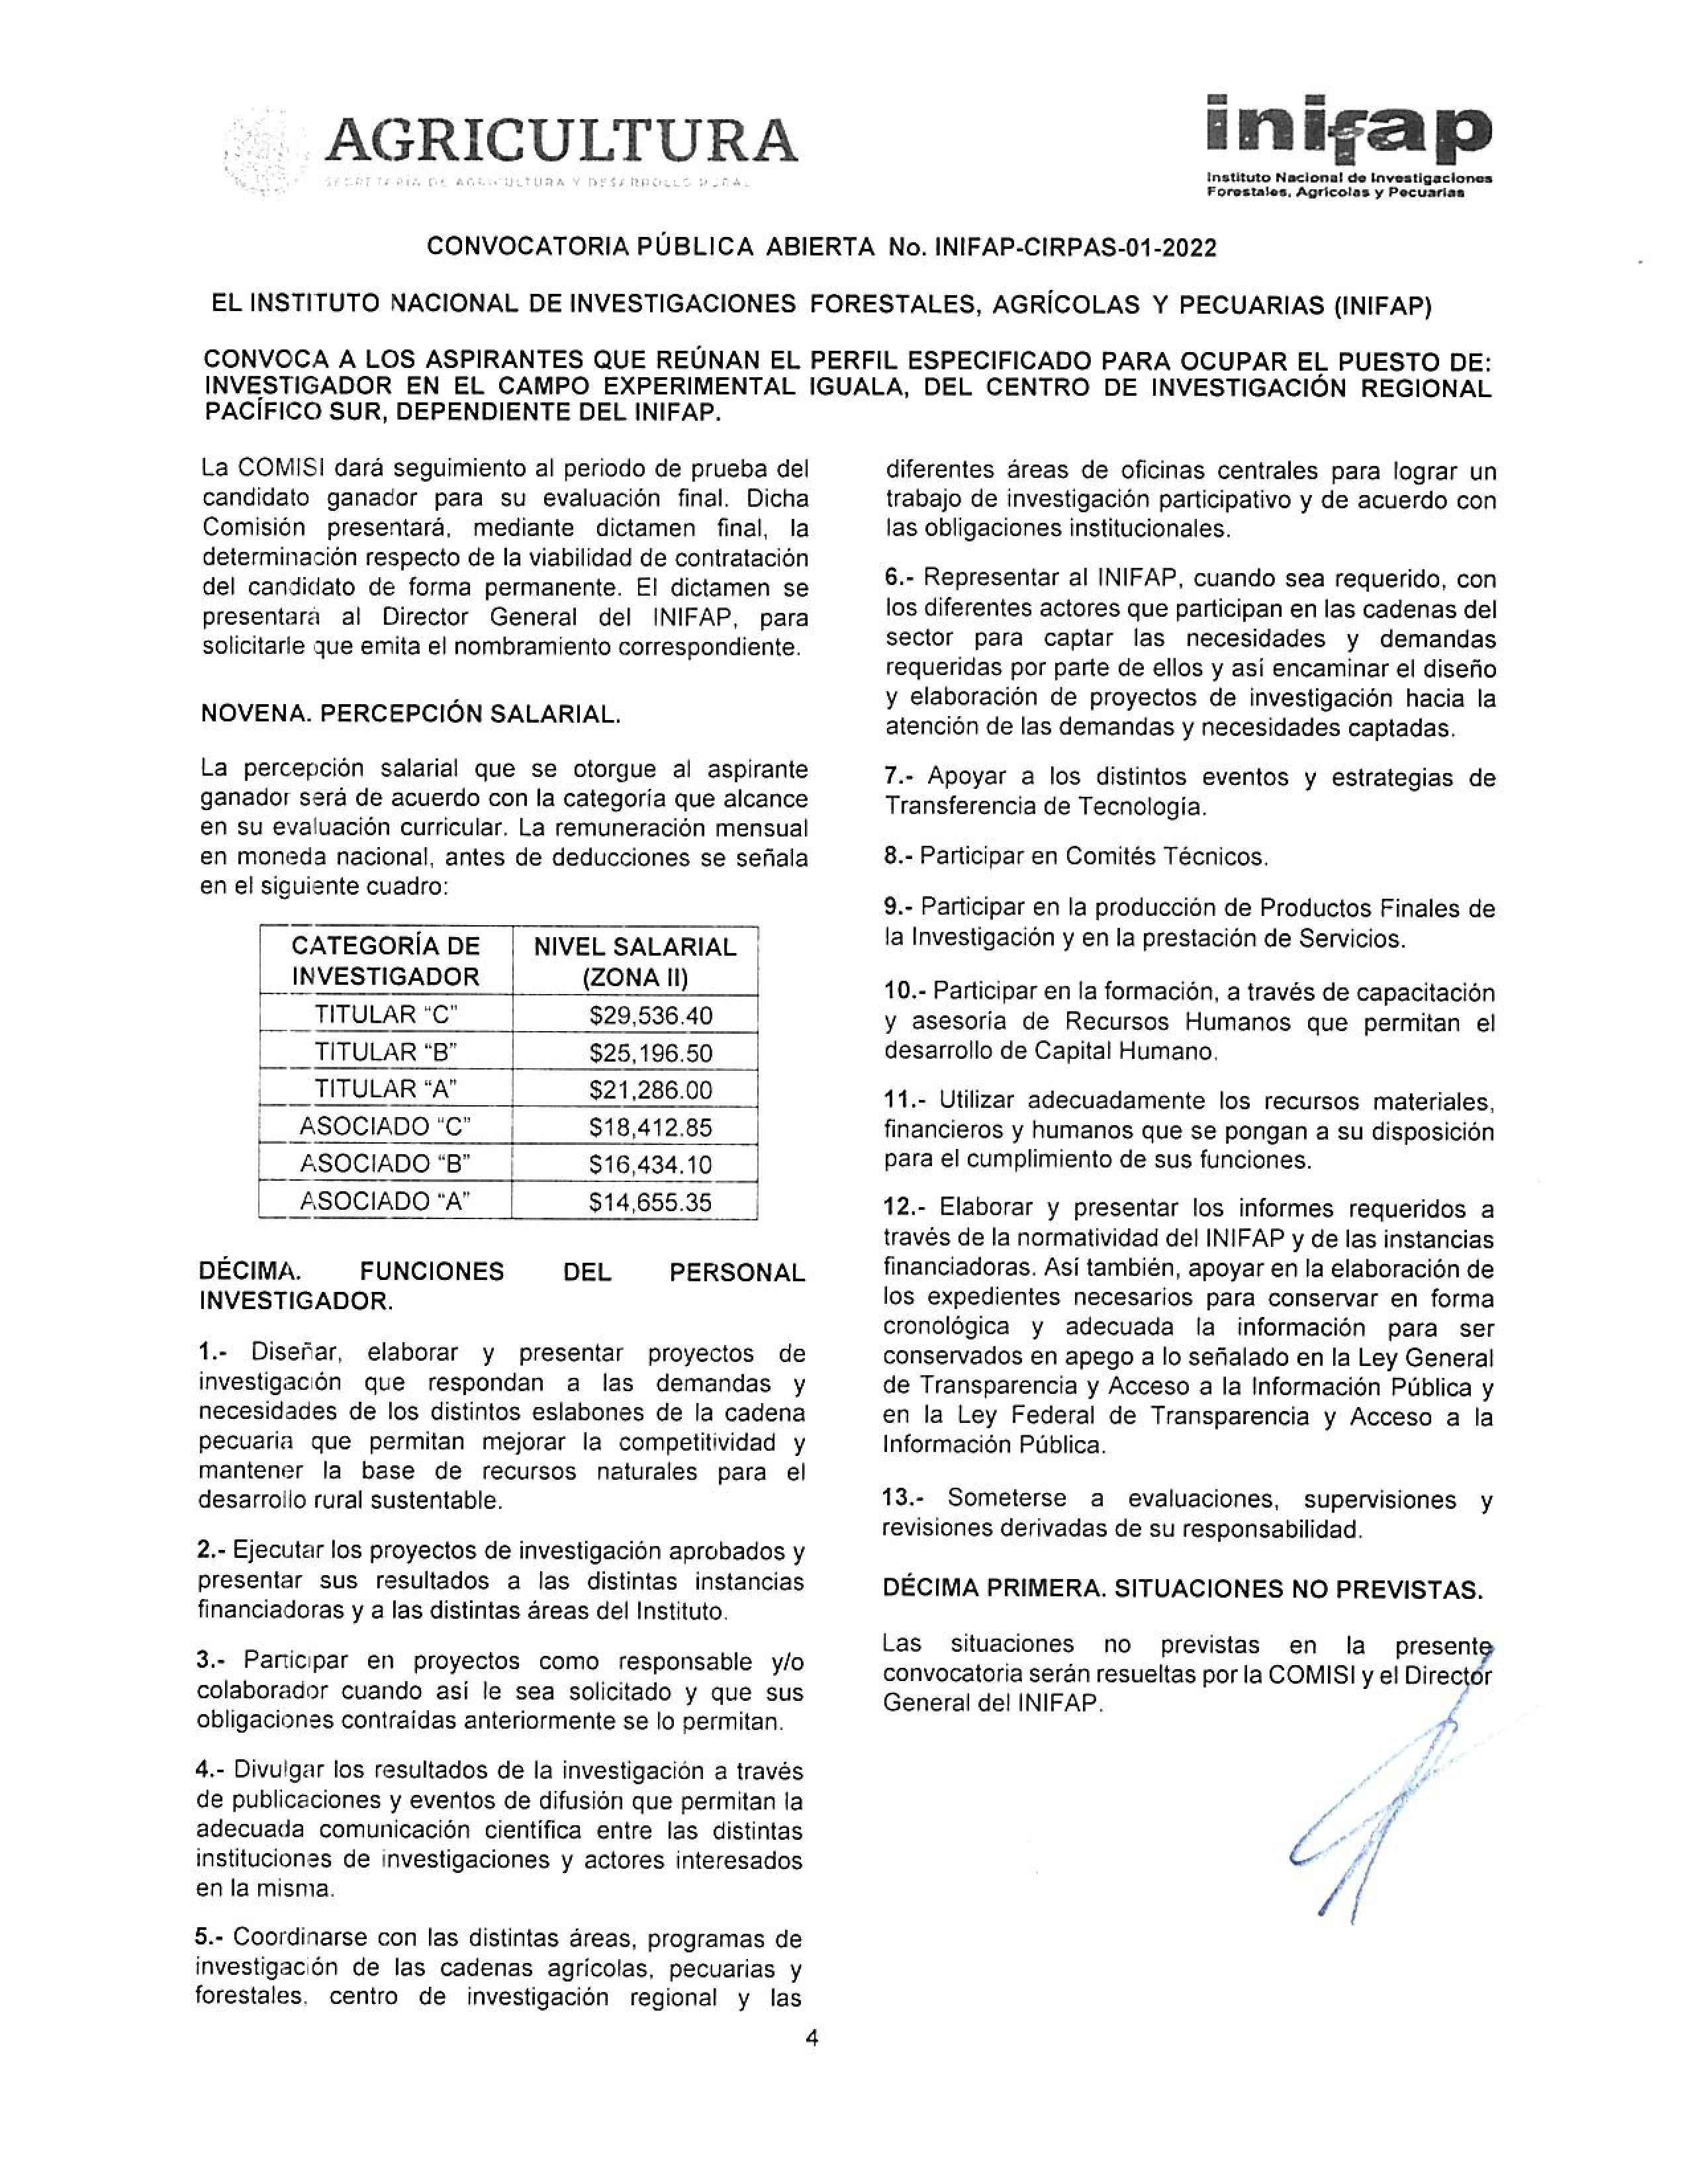 CONVOCATORIA PUBLICA ABIERTA NO. INIFAP-CIRPAS-01-2022 PAG.4